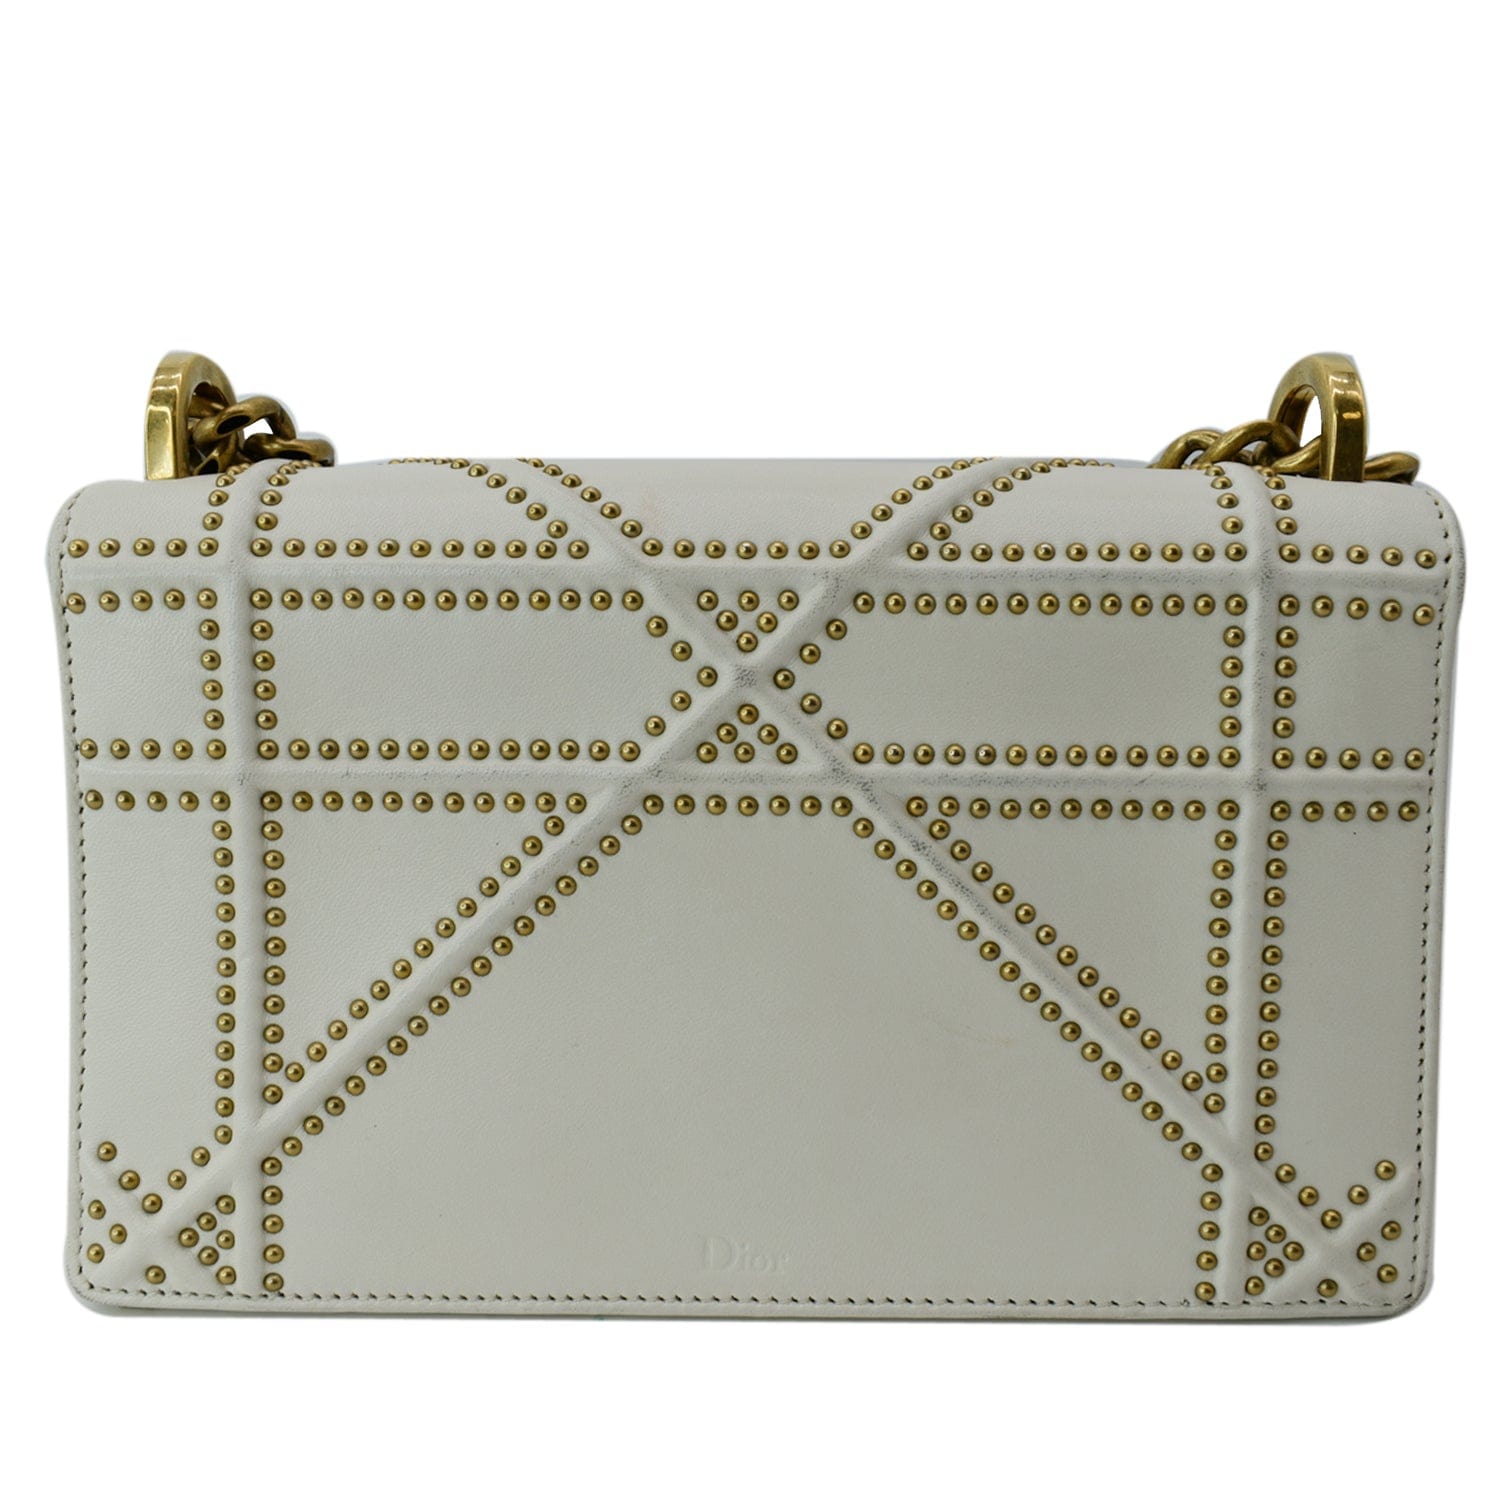 Christian Dior Studded Diorama Wallet on Chain Bag